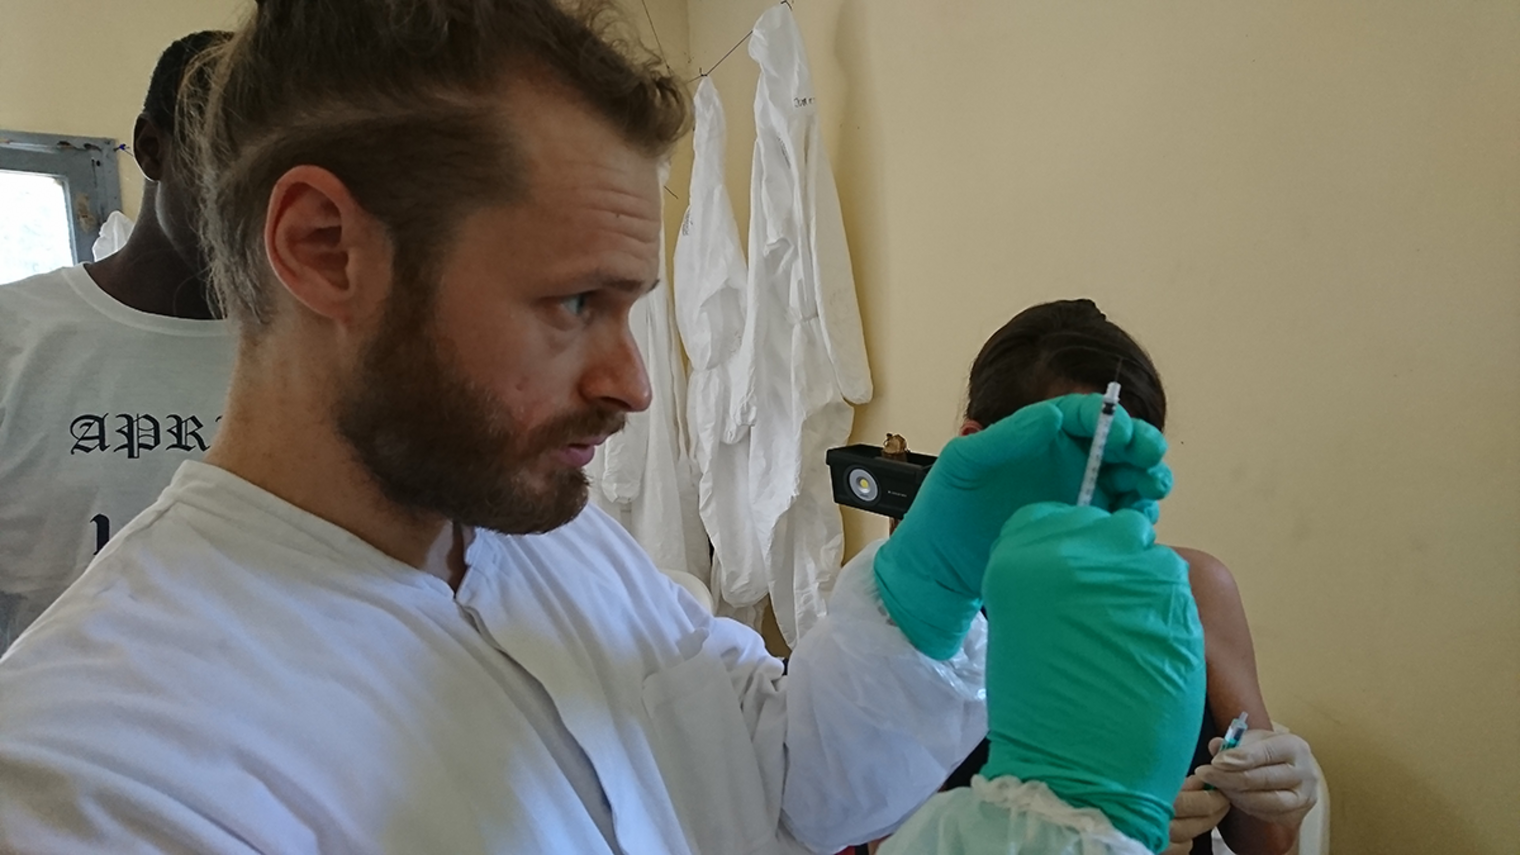 Lorenzo Lagostina prepares to take a blood sample.